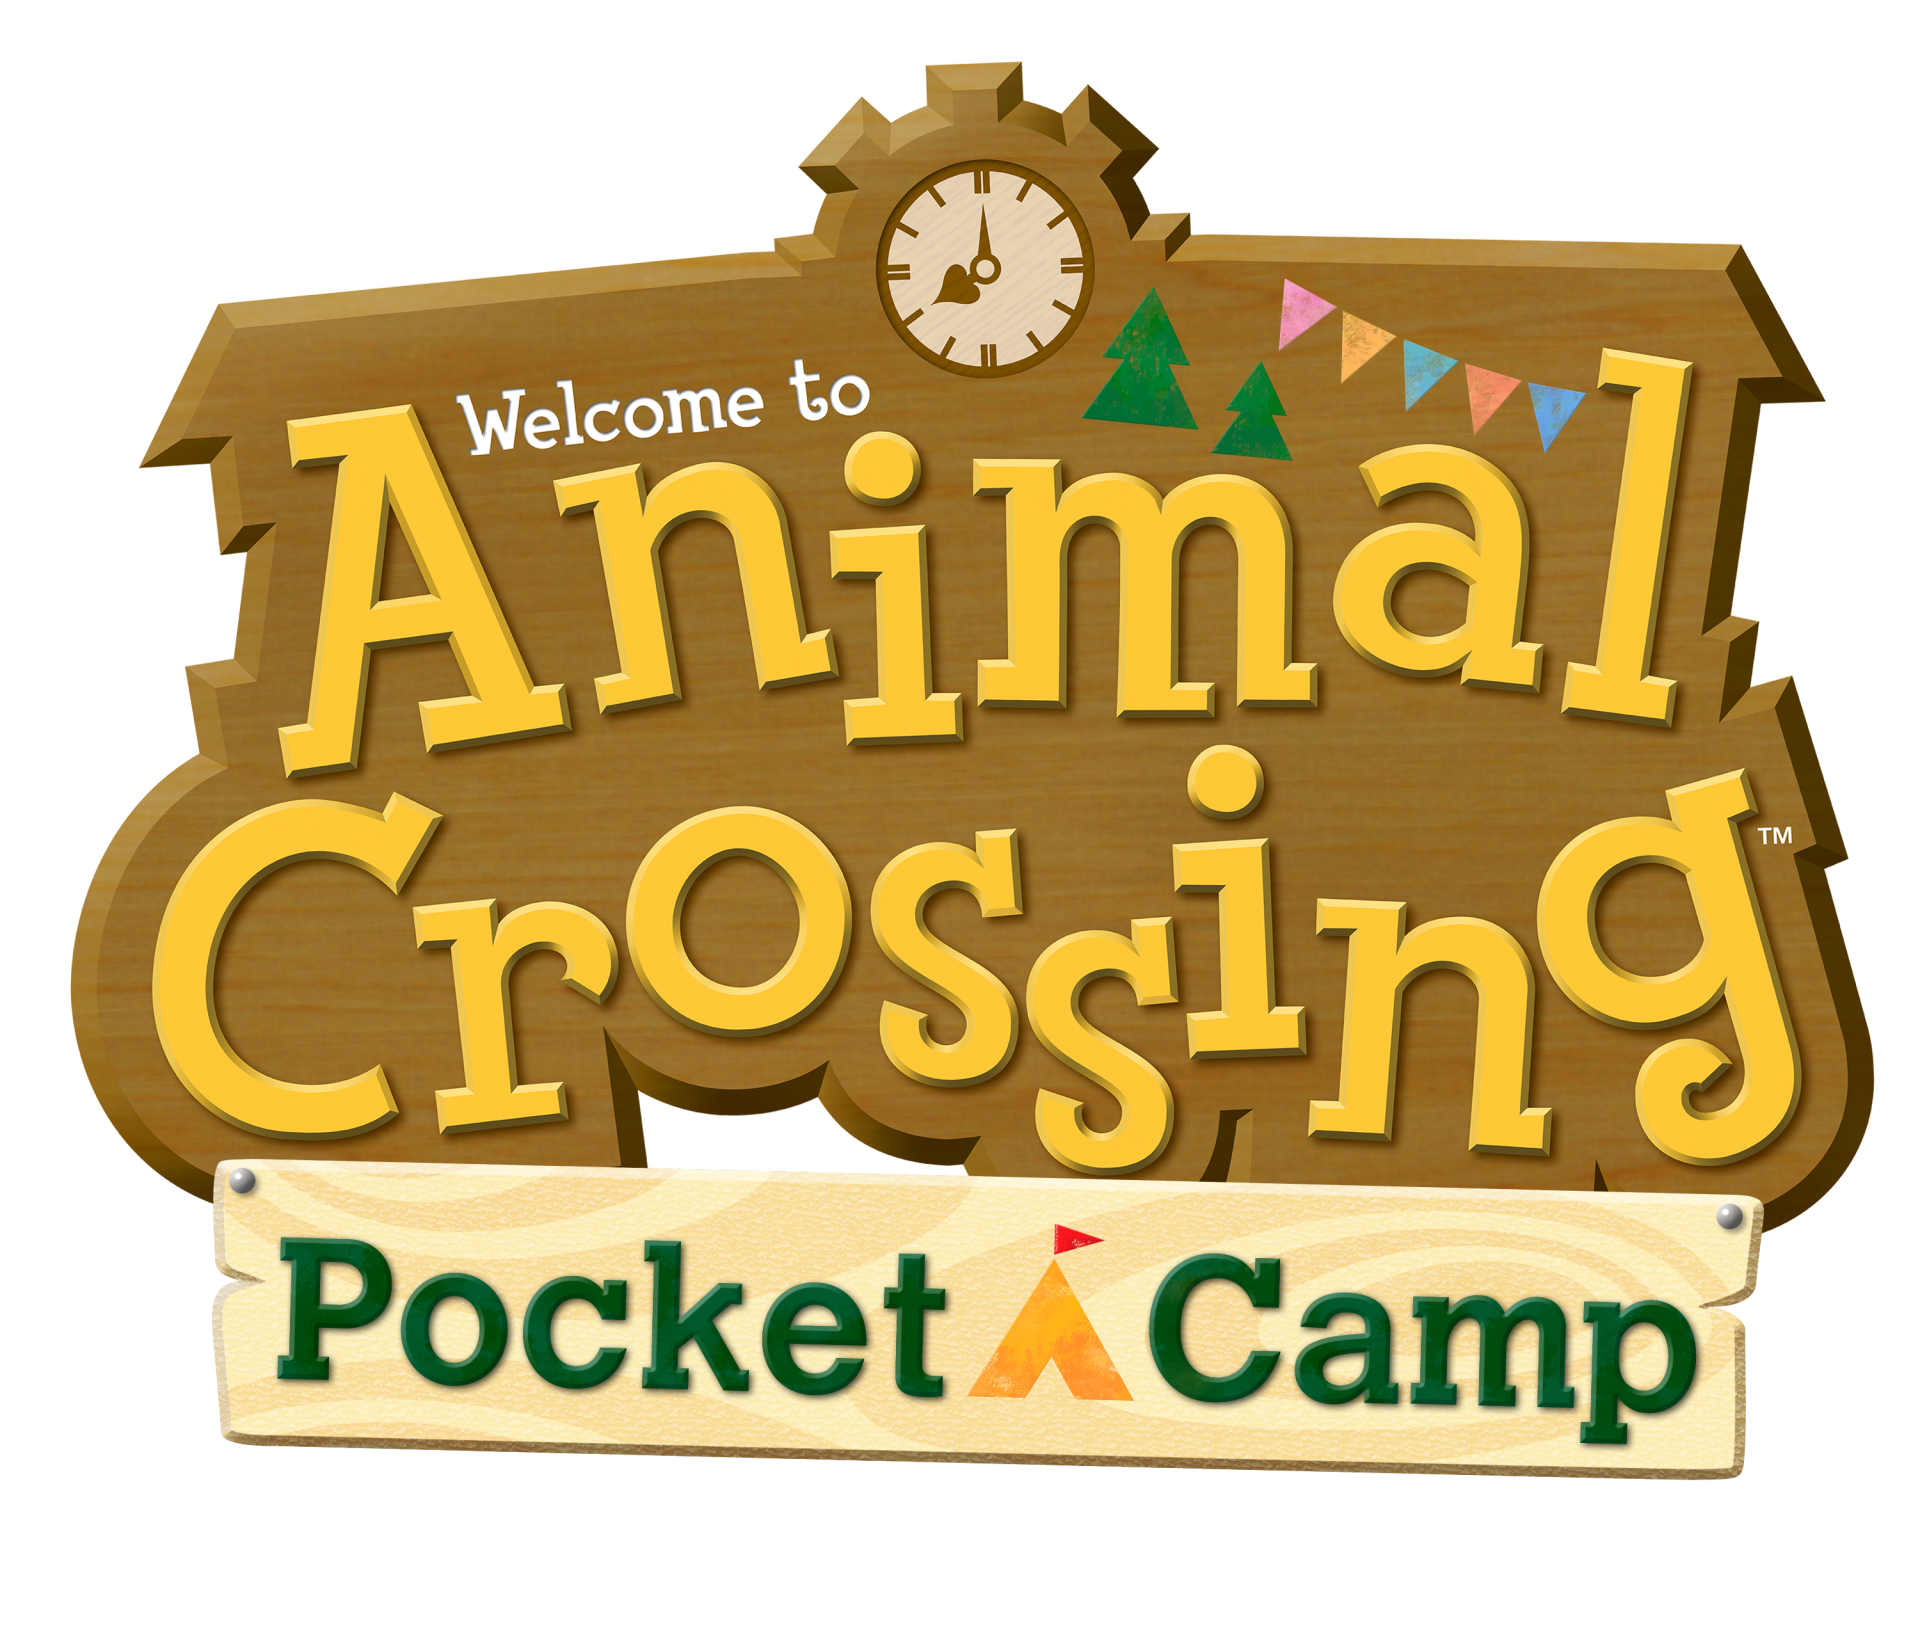 Pocket animal. Энимал Кроссинг покет Камп. Анимел Кроссинг пакет Камп. Animal Crossing Pocket Camp logo. Animal Crossing логотип.